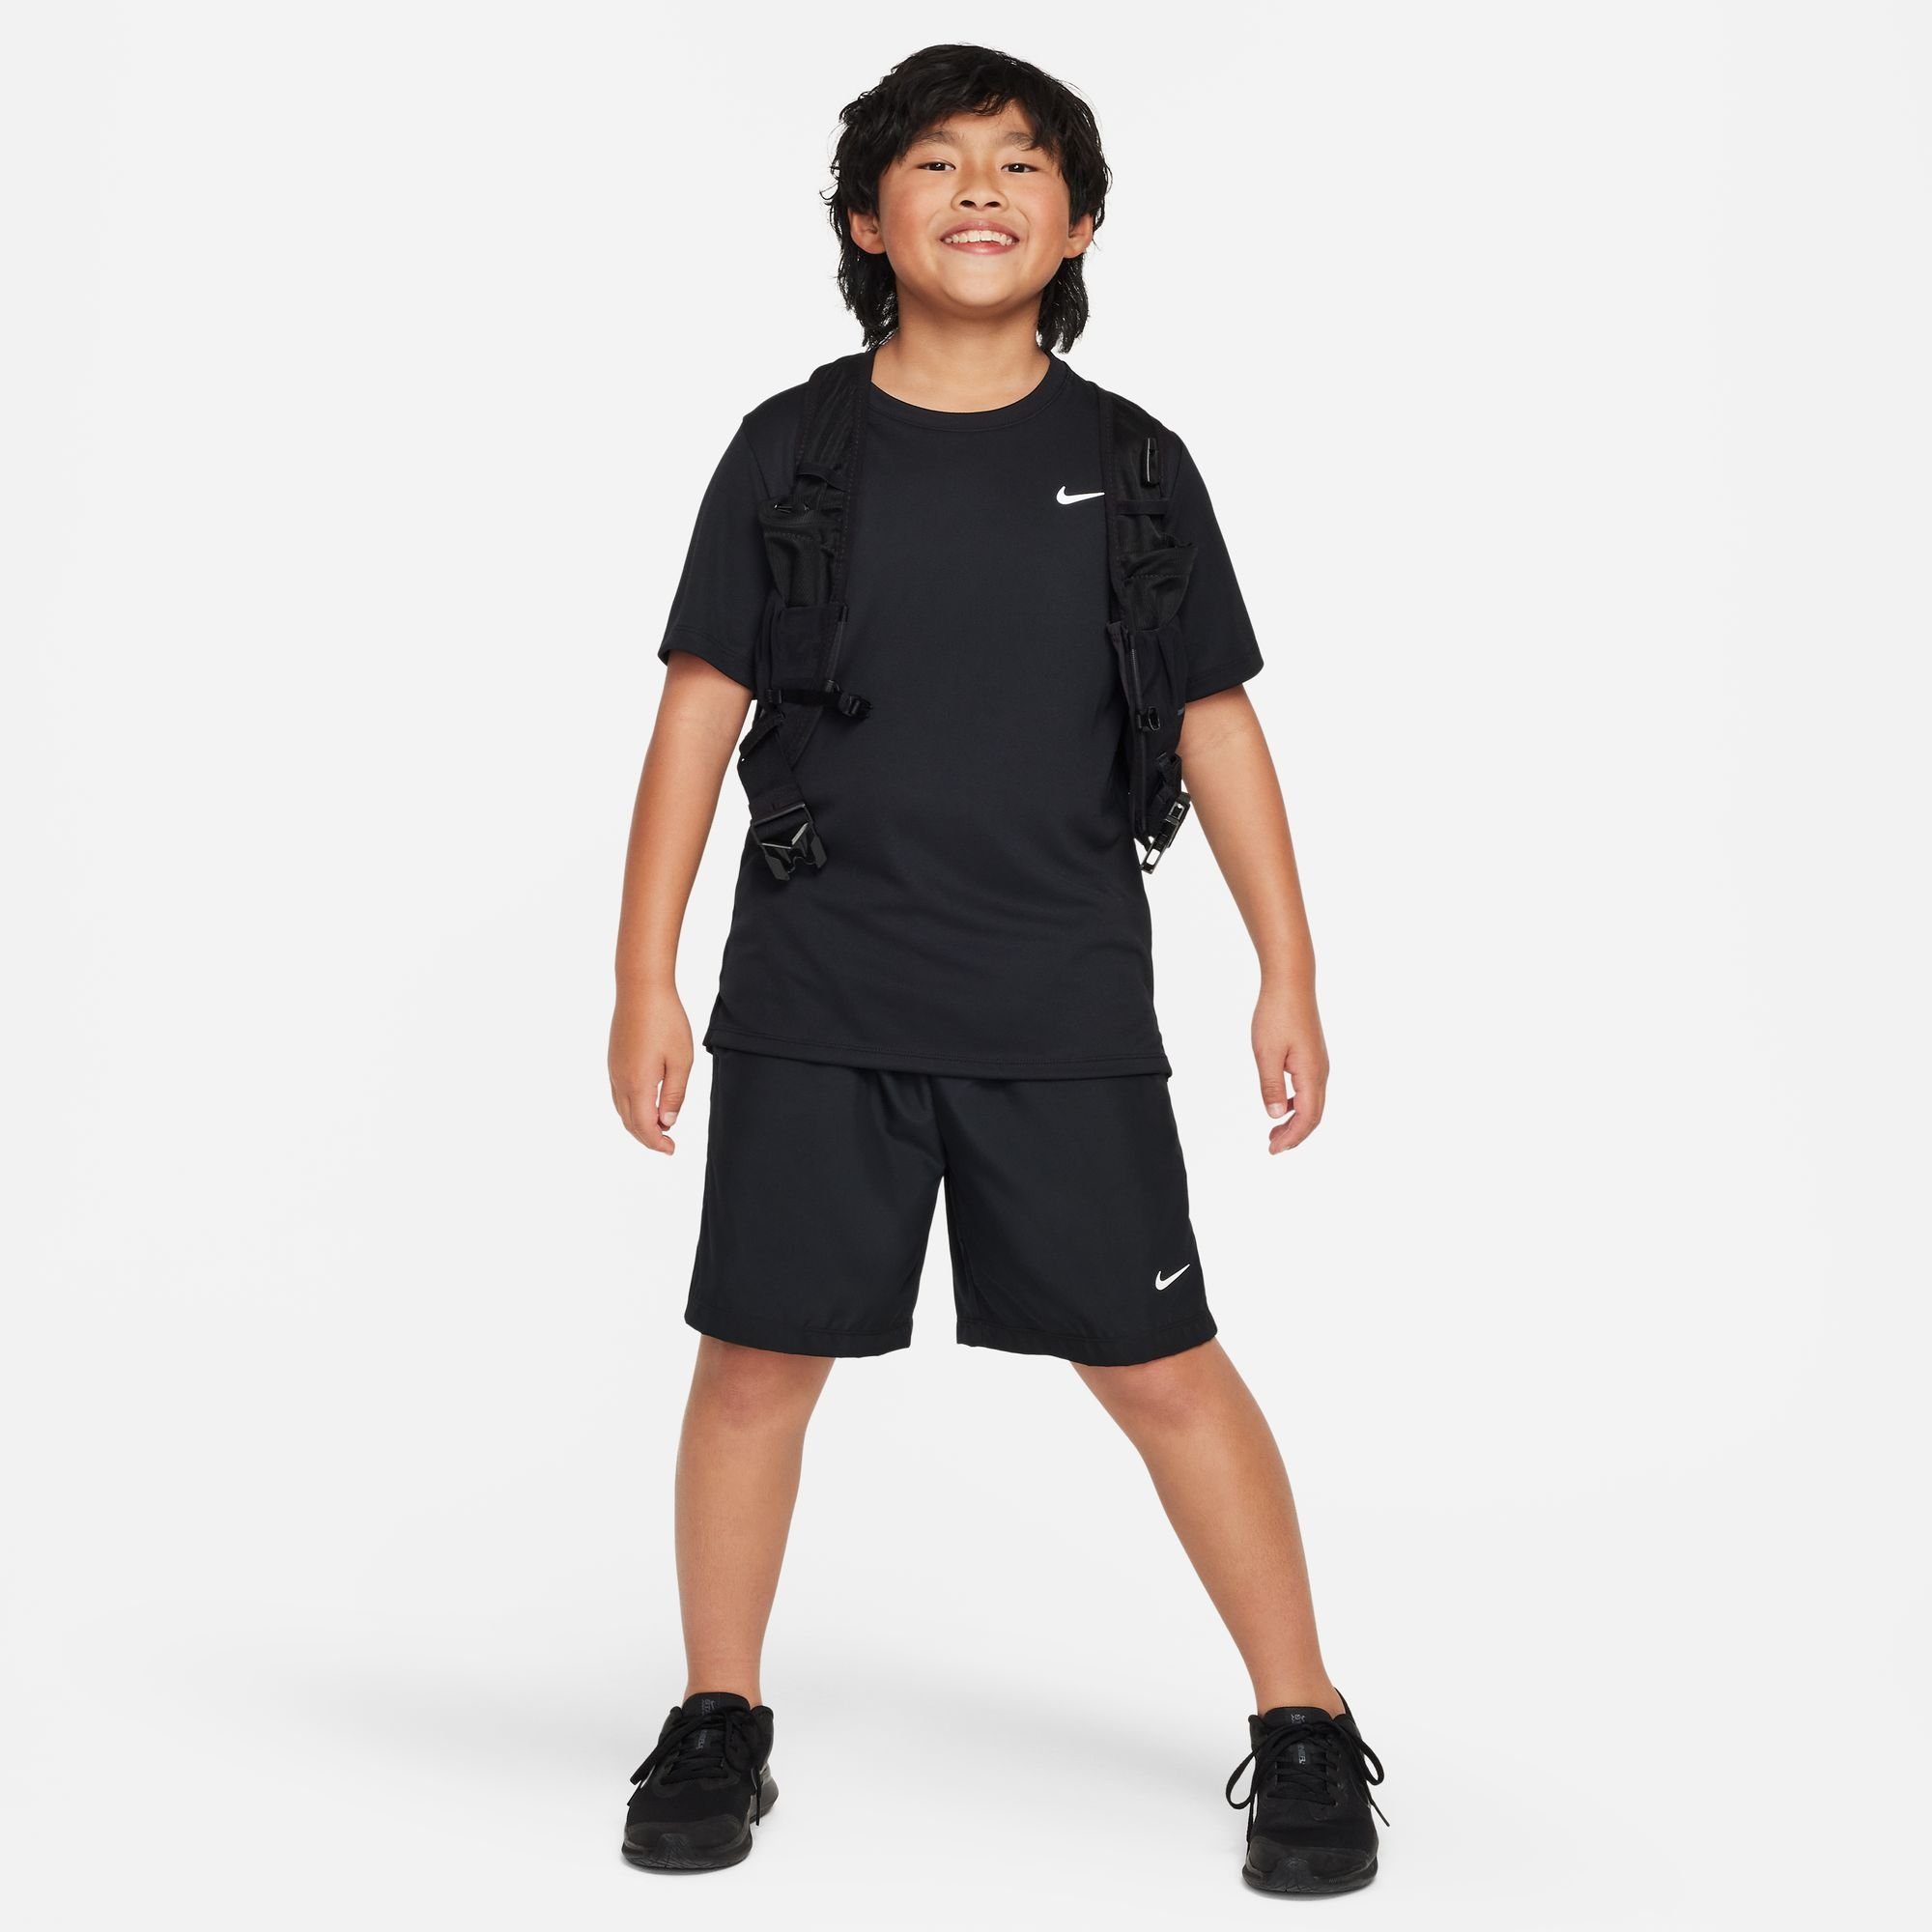 MILER Nike SHORT-SLEEVE TRAINING TOP BLACK/REFLECTIVE BIG (BOYS) DRI-FIT Trainingsshirt SILV KIDS'